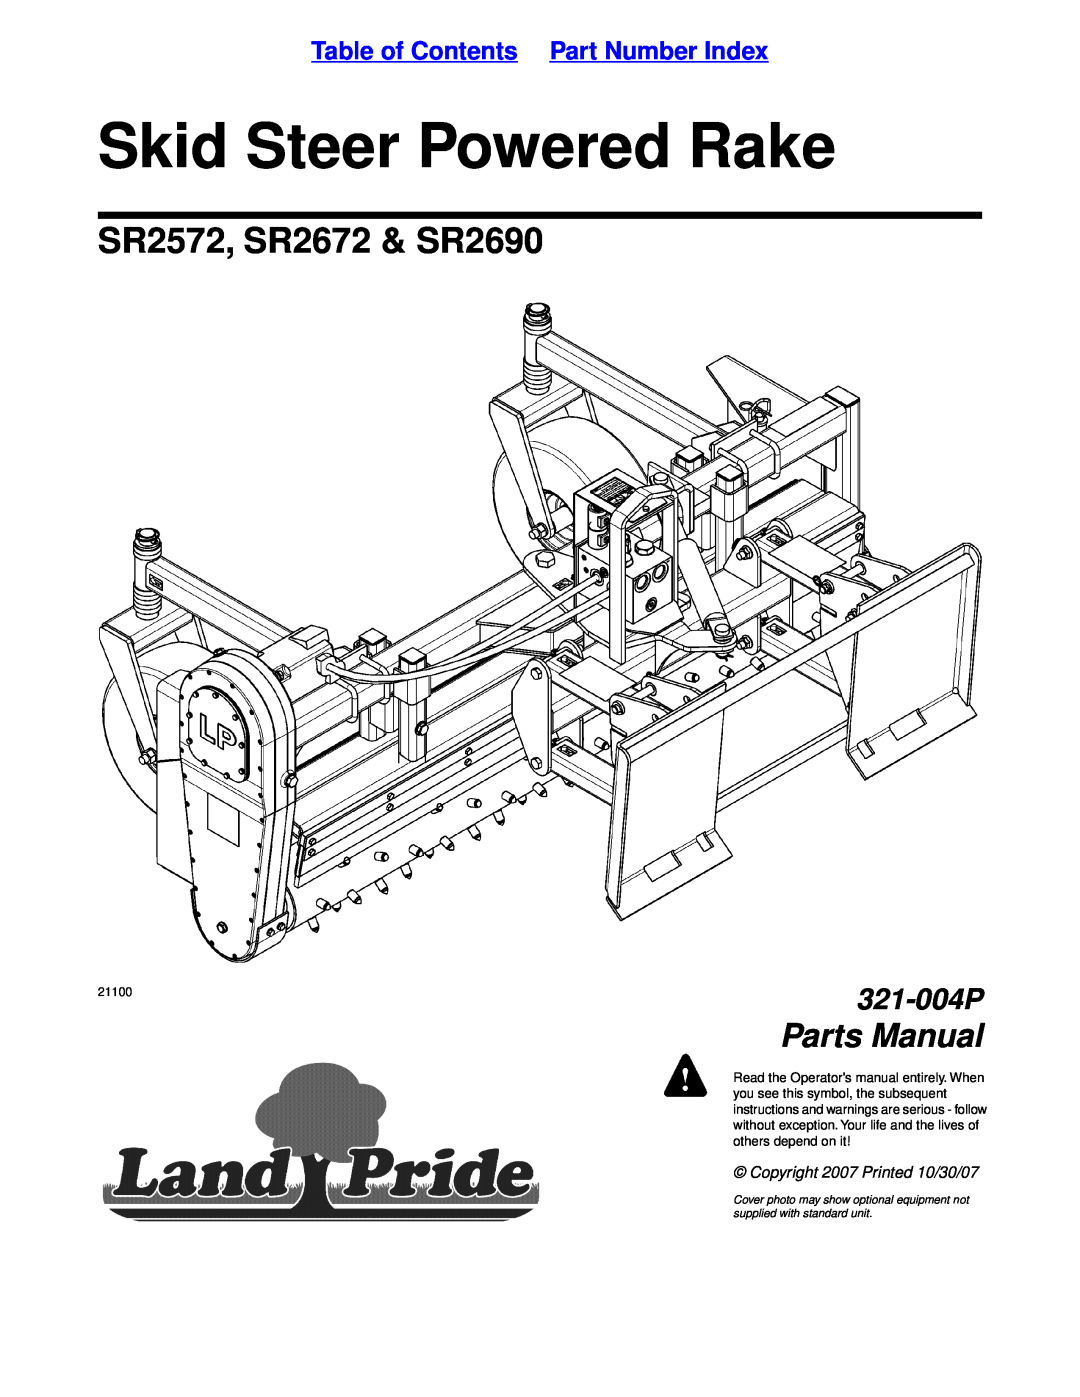 Land Pride manual Table of Contents Part Number Index, Skid Steer Powered Rake, SR2572, SR2672 & SR2690, Parts Manual 